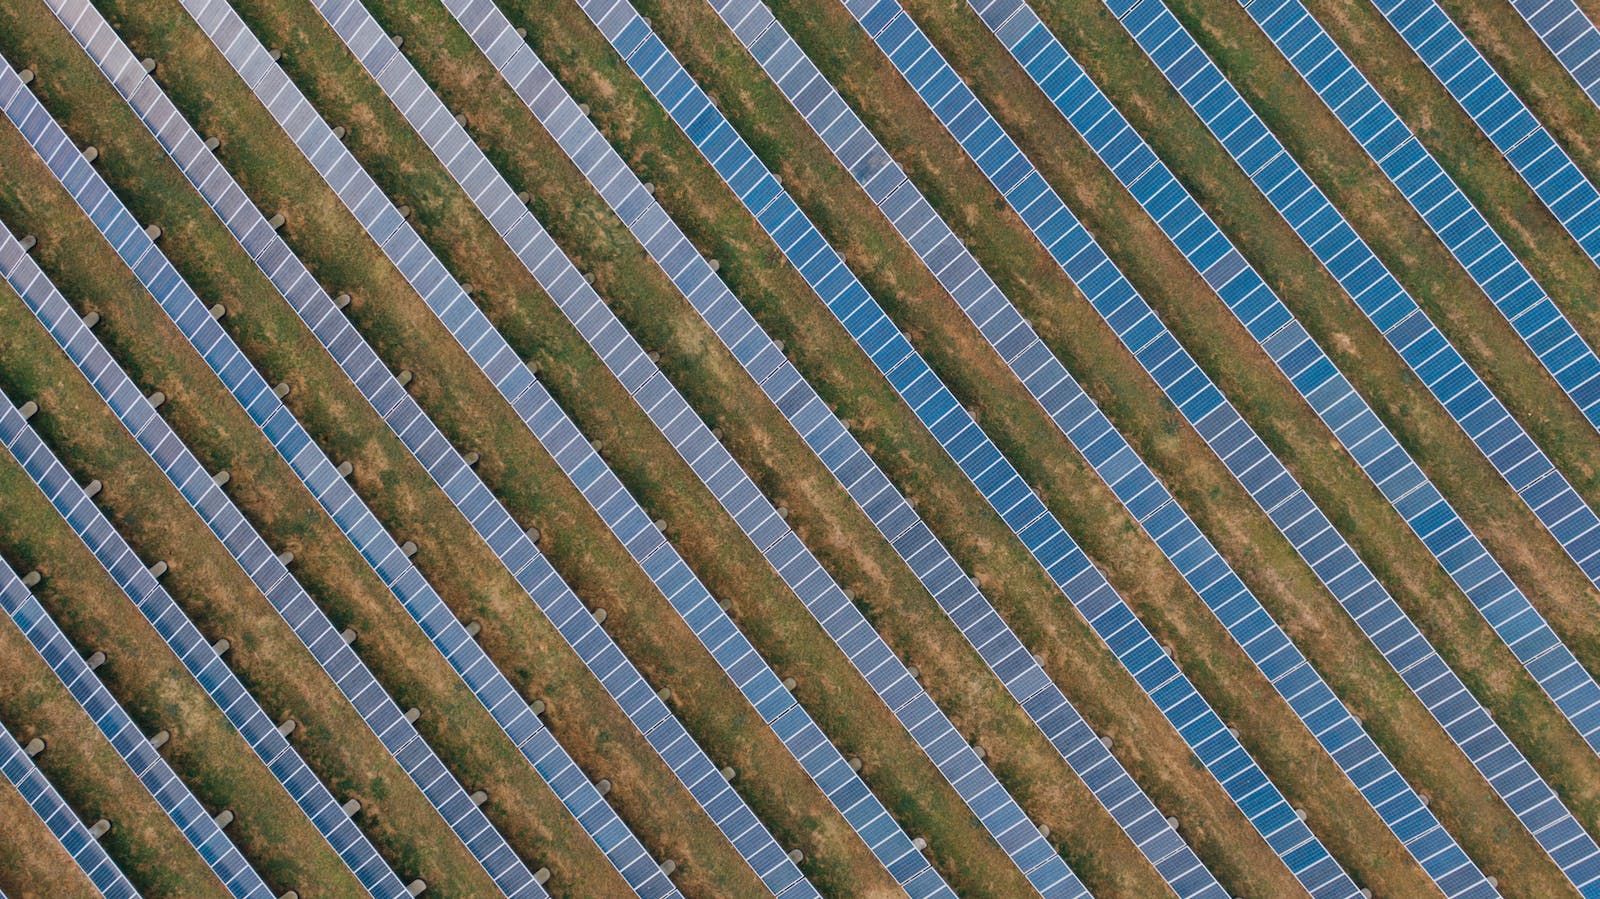 Heel veld met zonnepanelen die groene energie opwekken